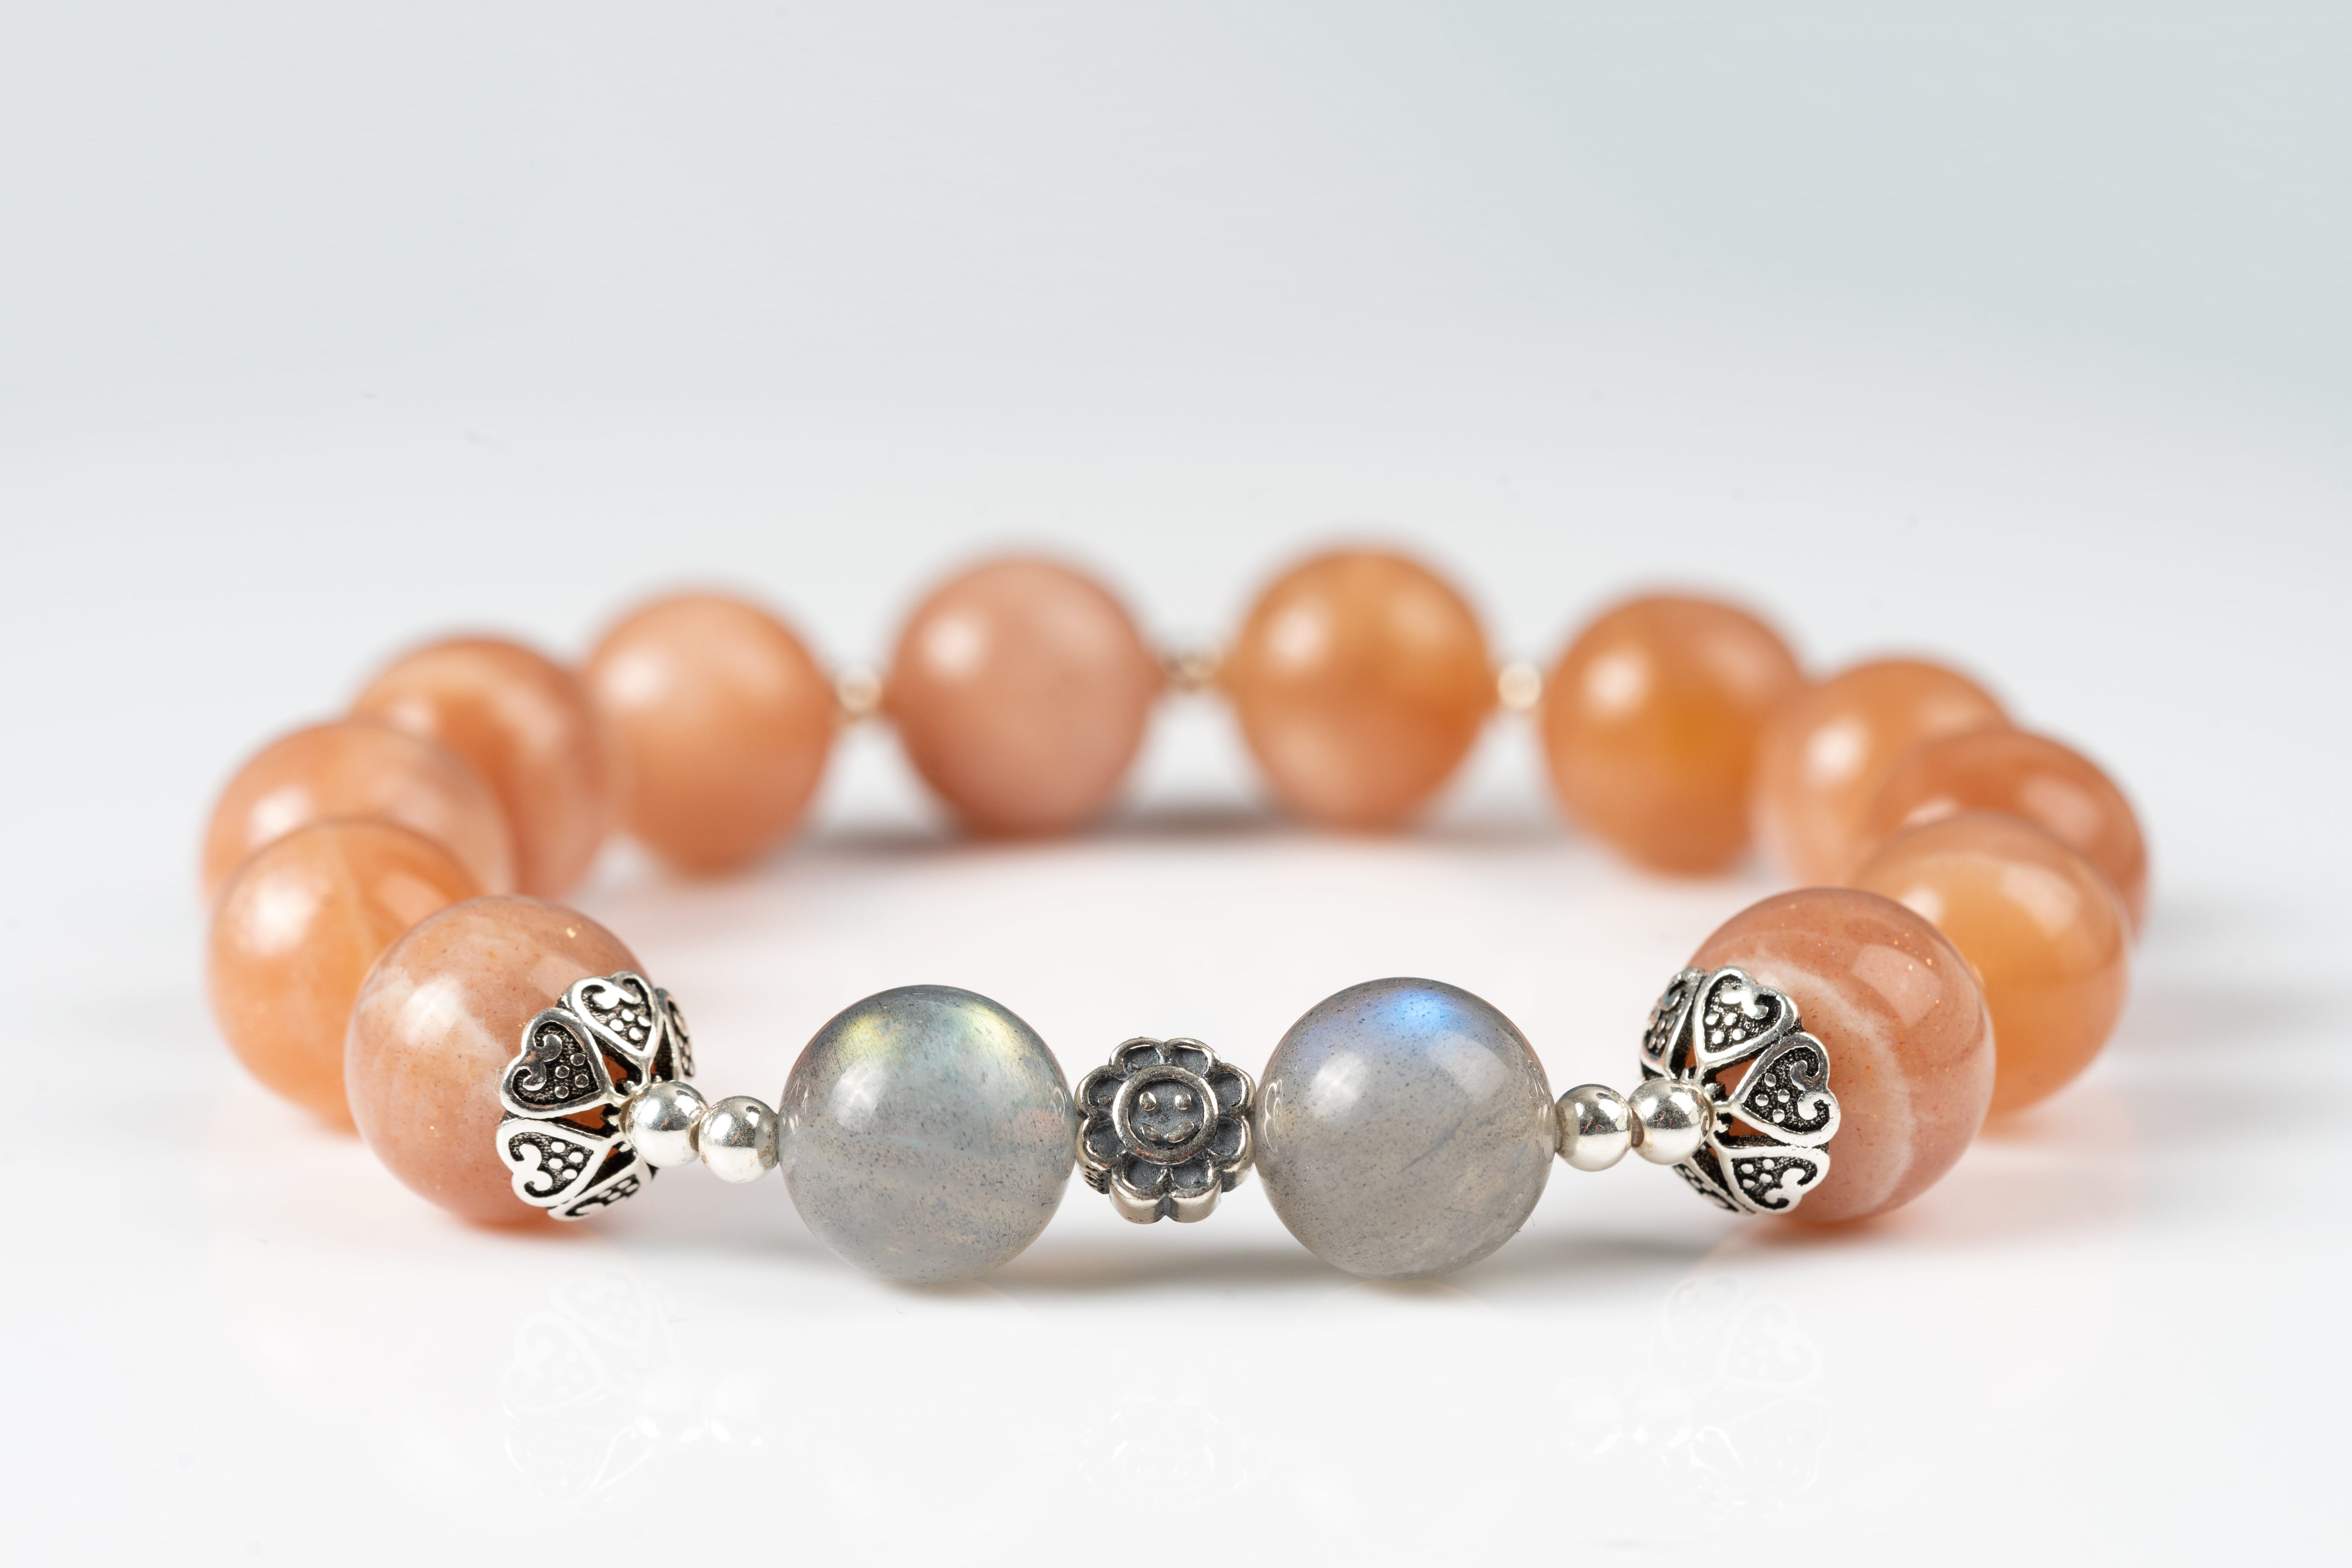 Peach & grey moonstone Sterling silver bracelet